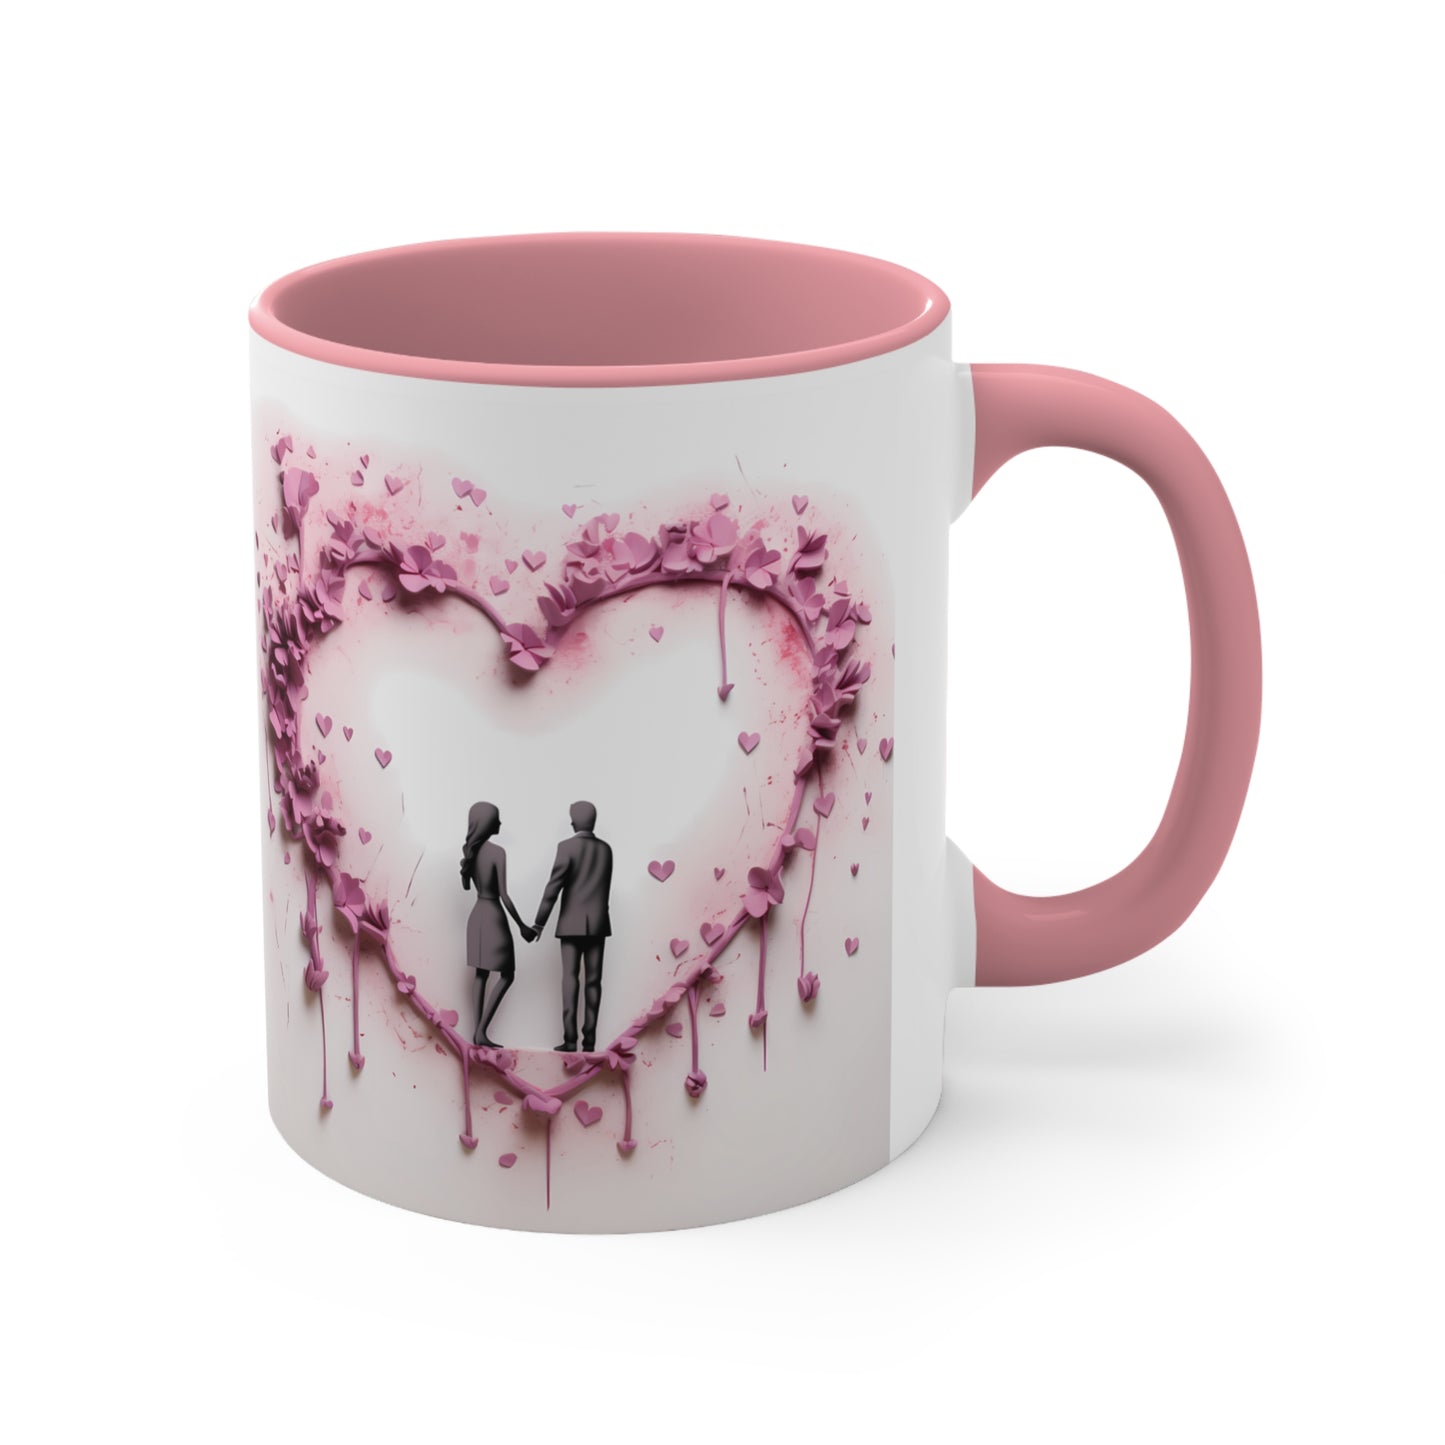 3D Valentine heart mug, couple mug, love heart couple mug, Funny Valentine Heart Candy, heart candy mug, conversation heart mug, Heart-Shaped Mug, Coffee Mug, 11oz